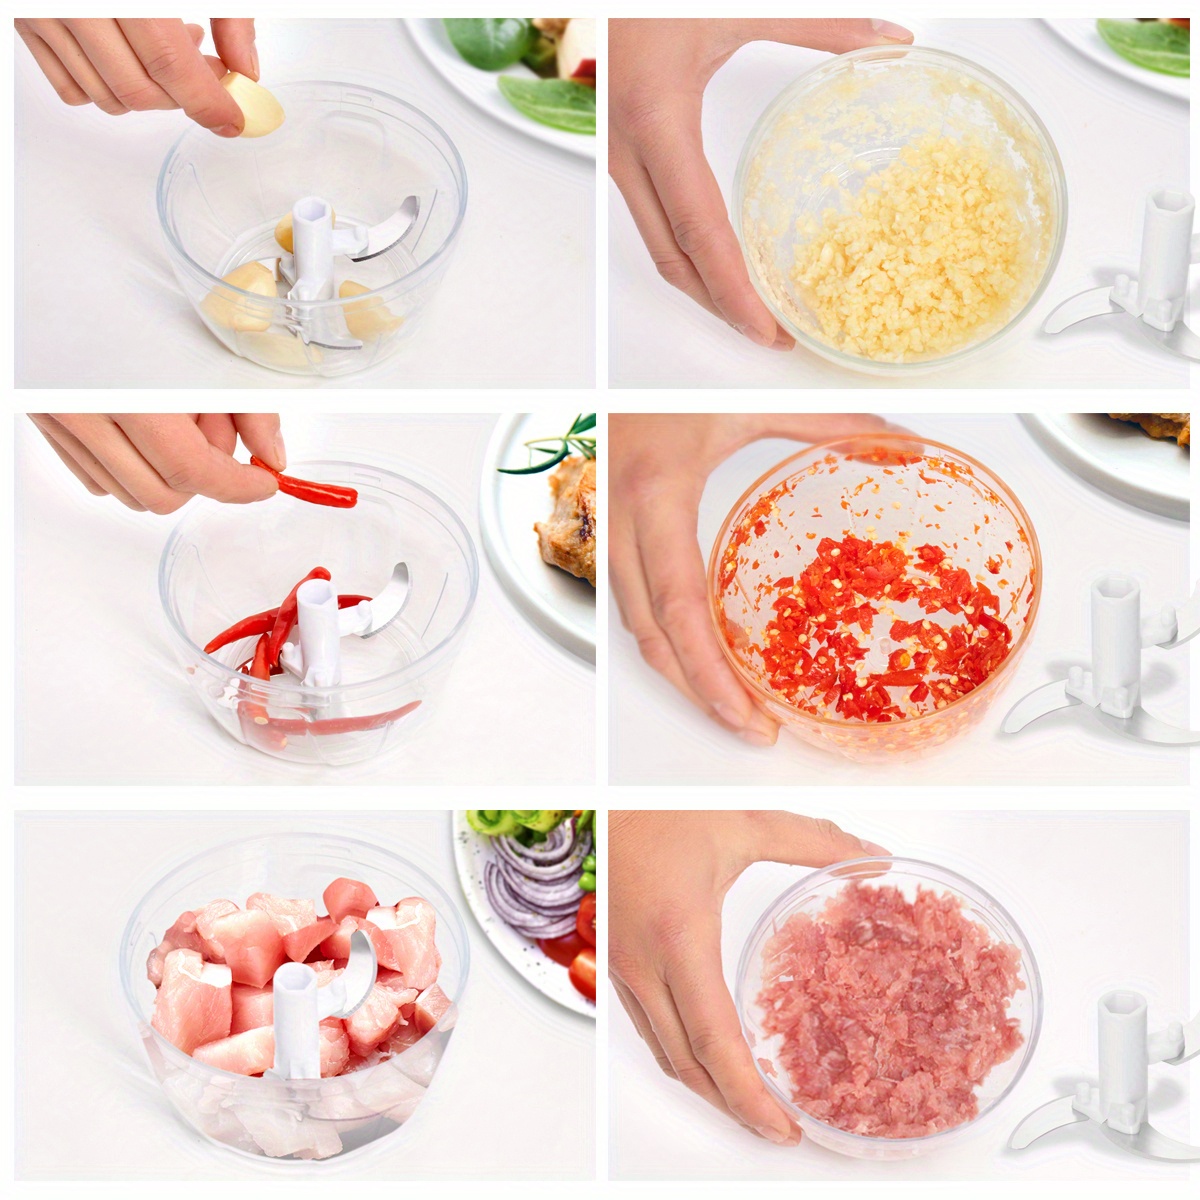 Mini Manual Food Garlic Chopper Hand Pull Mincer Blender Meat Vegetable  Cutter Chopper Processor Crusher Kitchen Tools